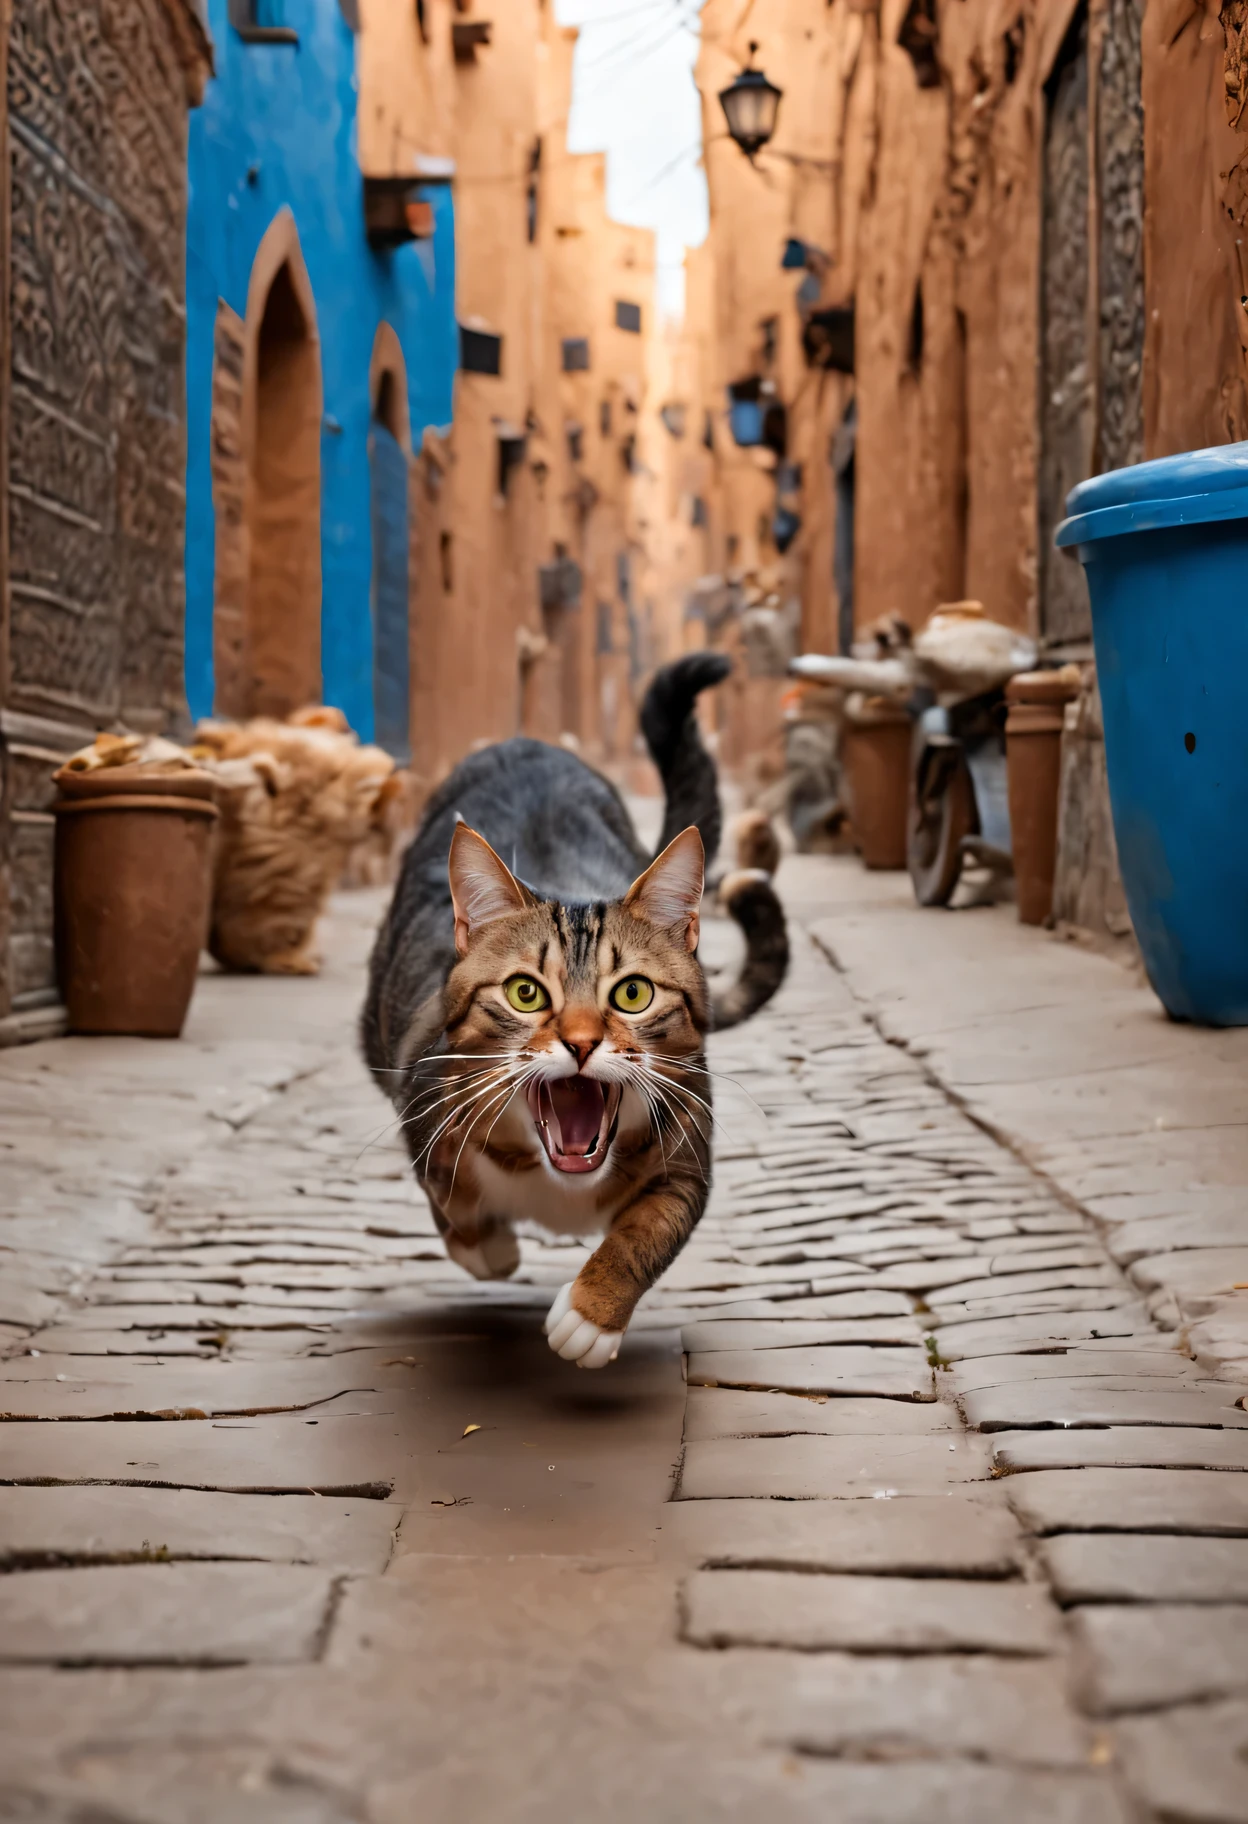 there is a Katze that is running down the street with Moroccan people chasing it, awesome Katze, Extrem realistisches Foto, Tom und Jerry aus dem wirklichen Leben, happy Katze, Katze attacking Marrakech, funny Katze, running Katze, !!! Katze!!!, !!!! Katze!!!!, Sehr realistisches Foto, Bild aus dem echten Leben, ultrarealistisches Bild, Hyperechtes Foto, gestohlene Sardine im Mund, hyperrealistisches Bild